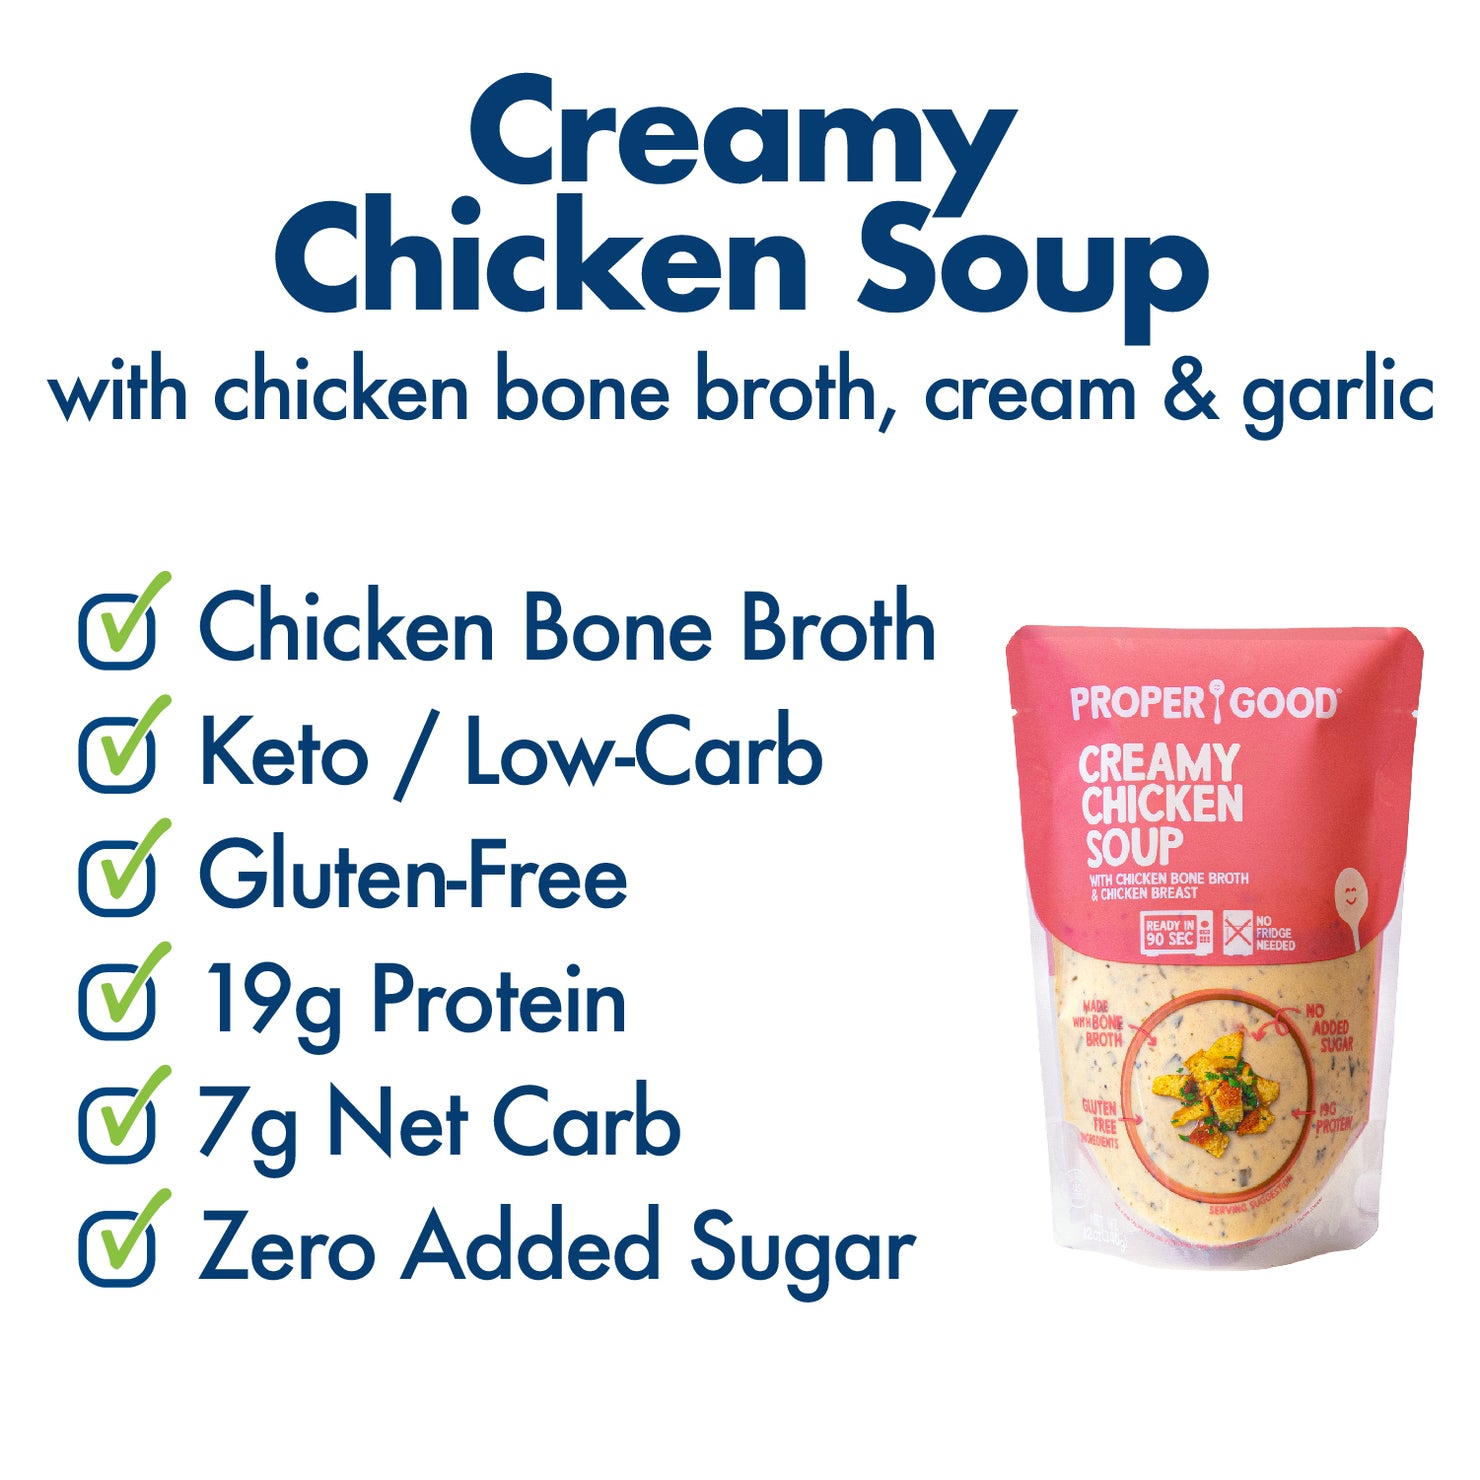 Creamy Chicken Soup Benefits - Eat Proper Good